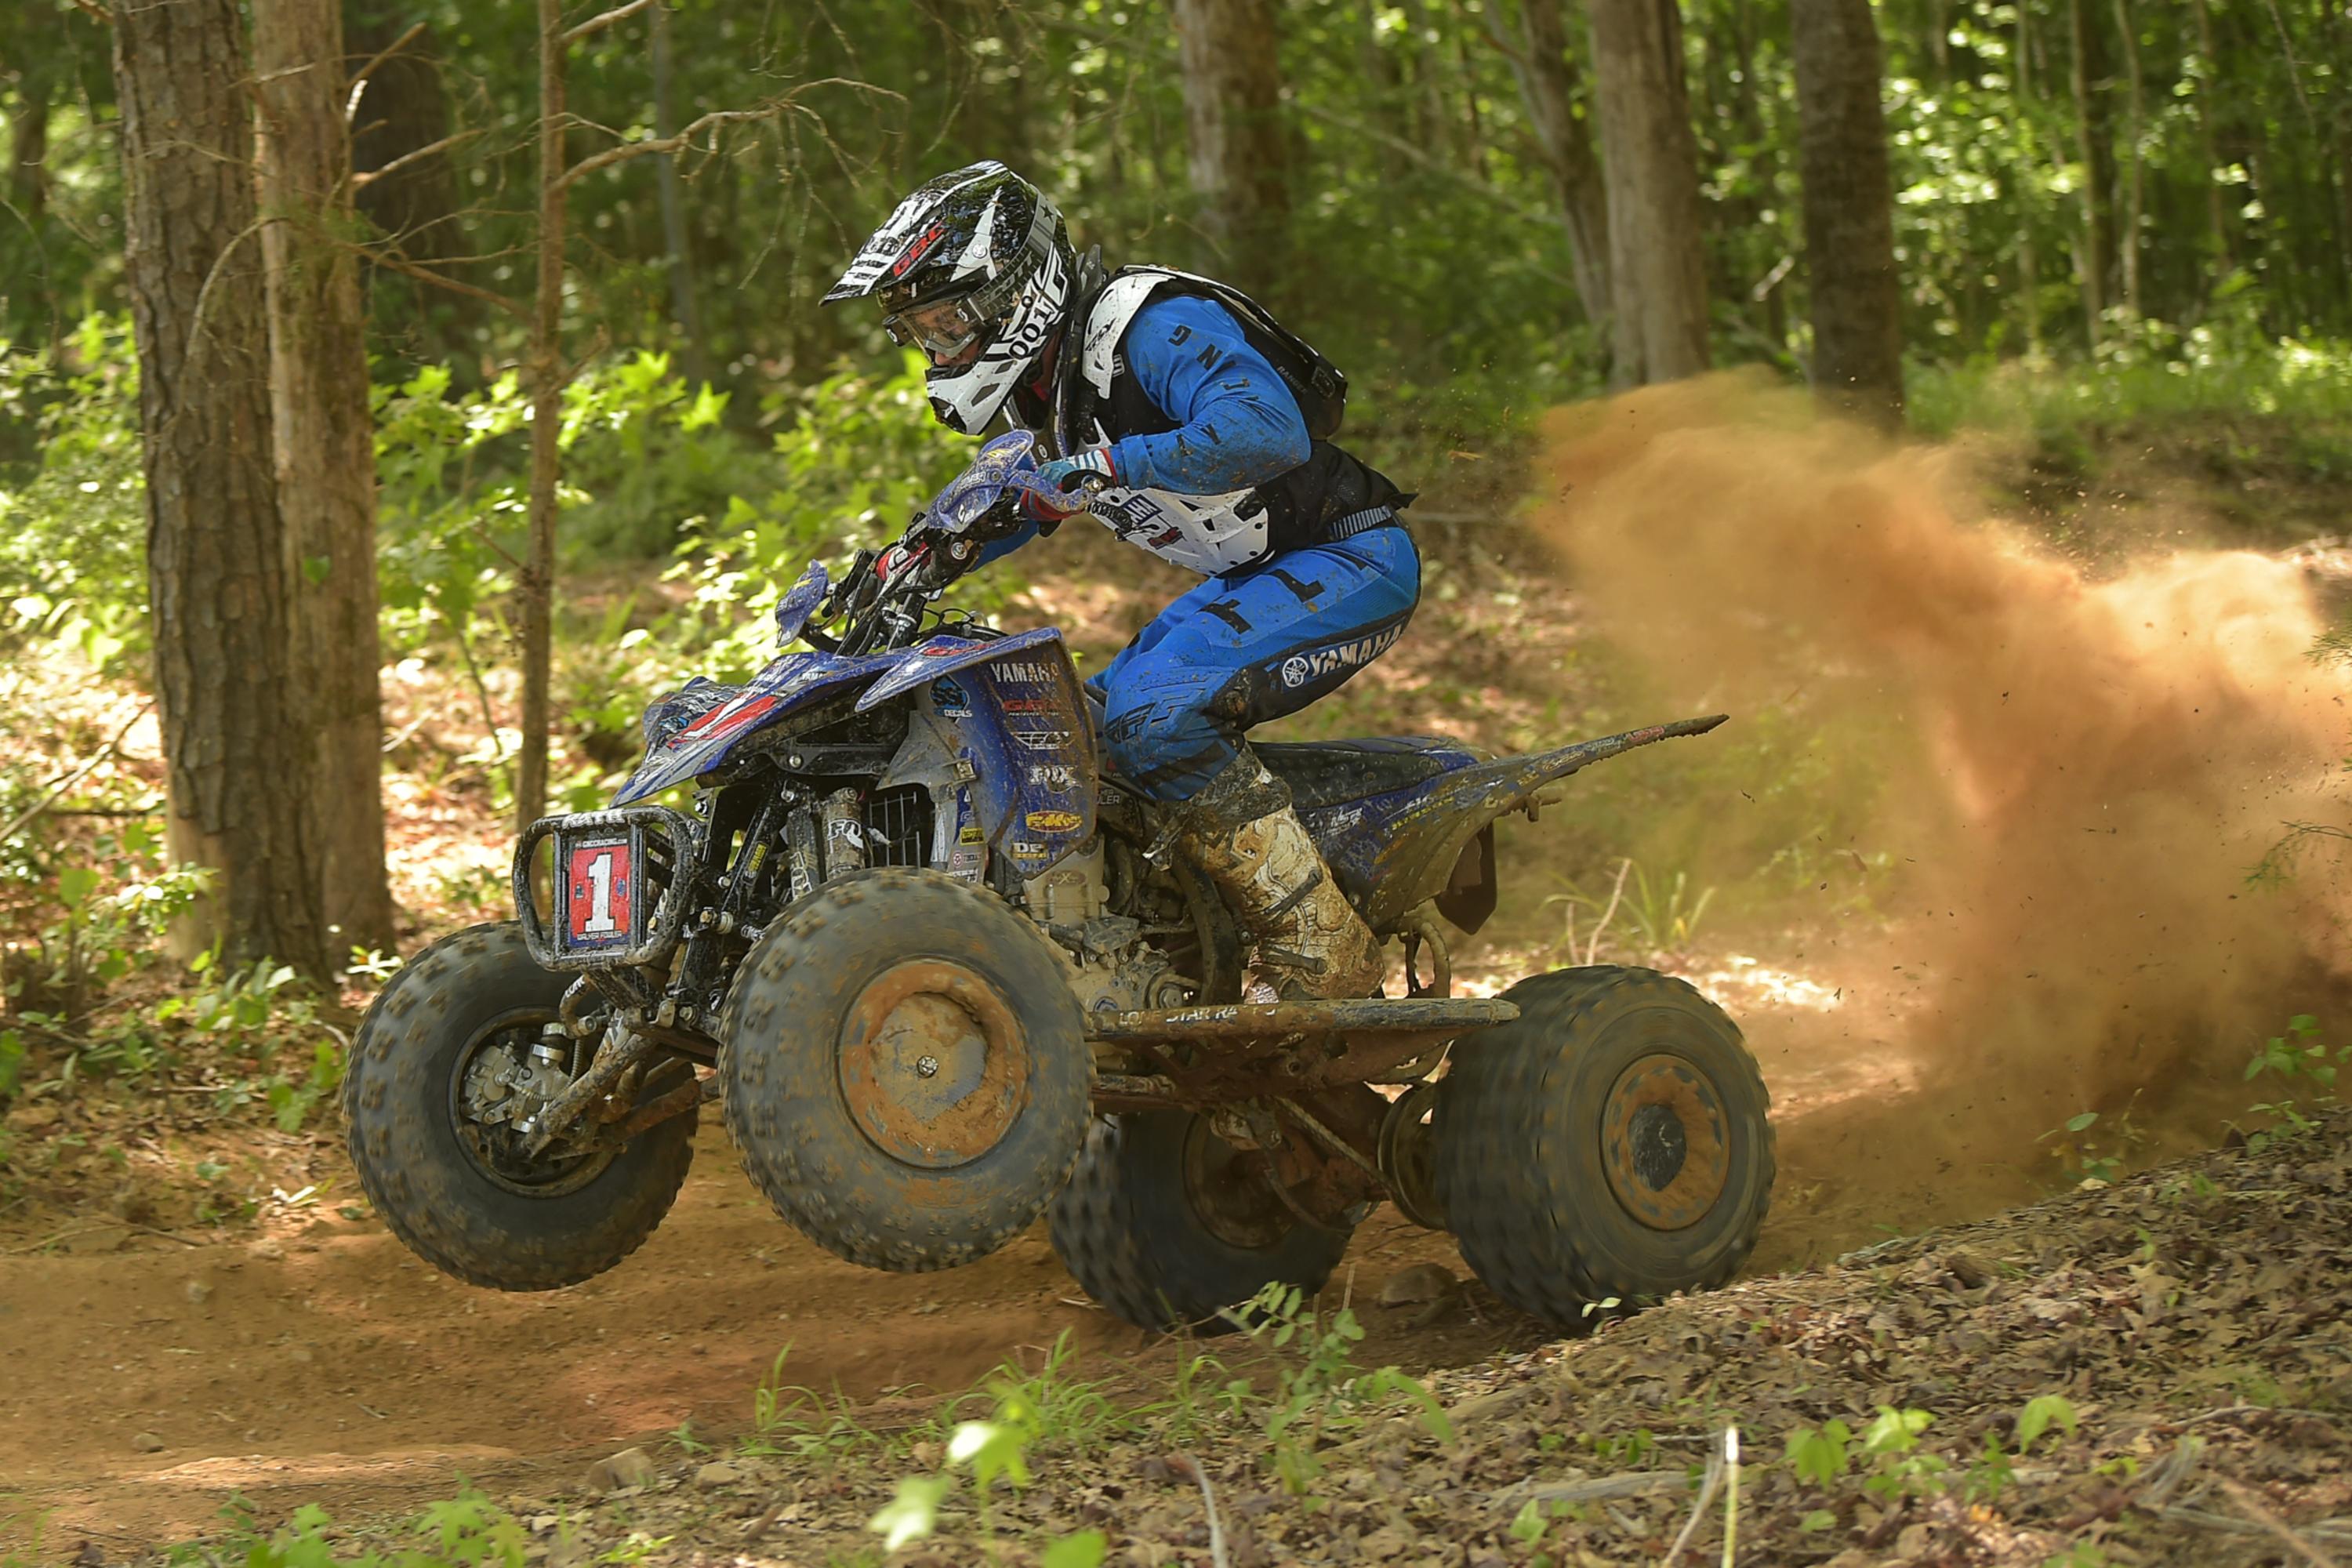 Yamaha GNCC rider wheelies on dirt trail